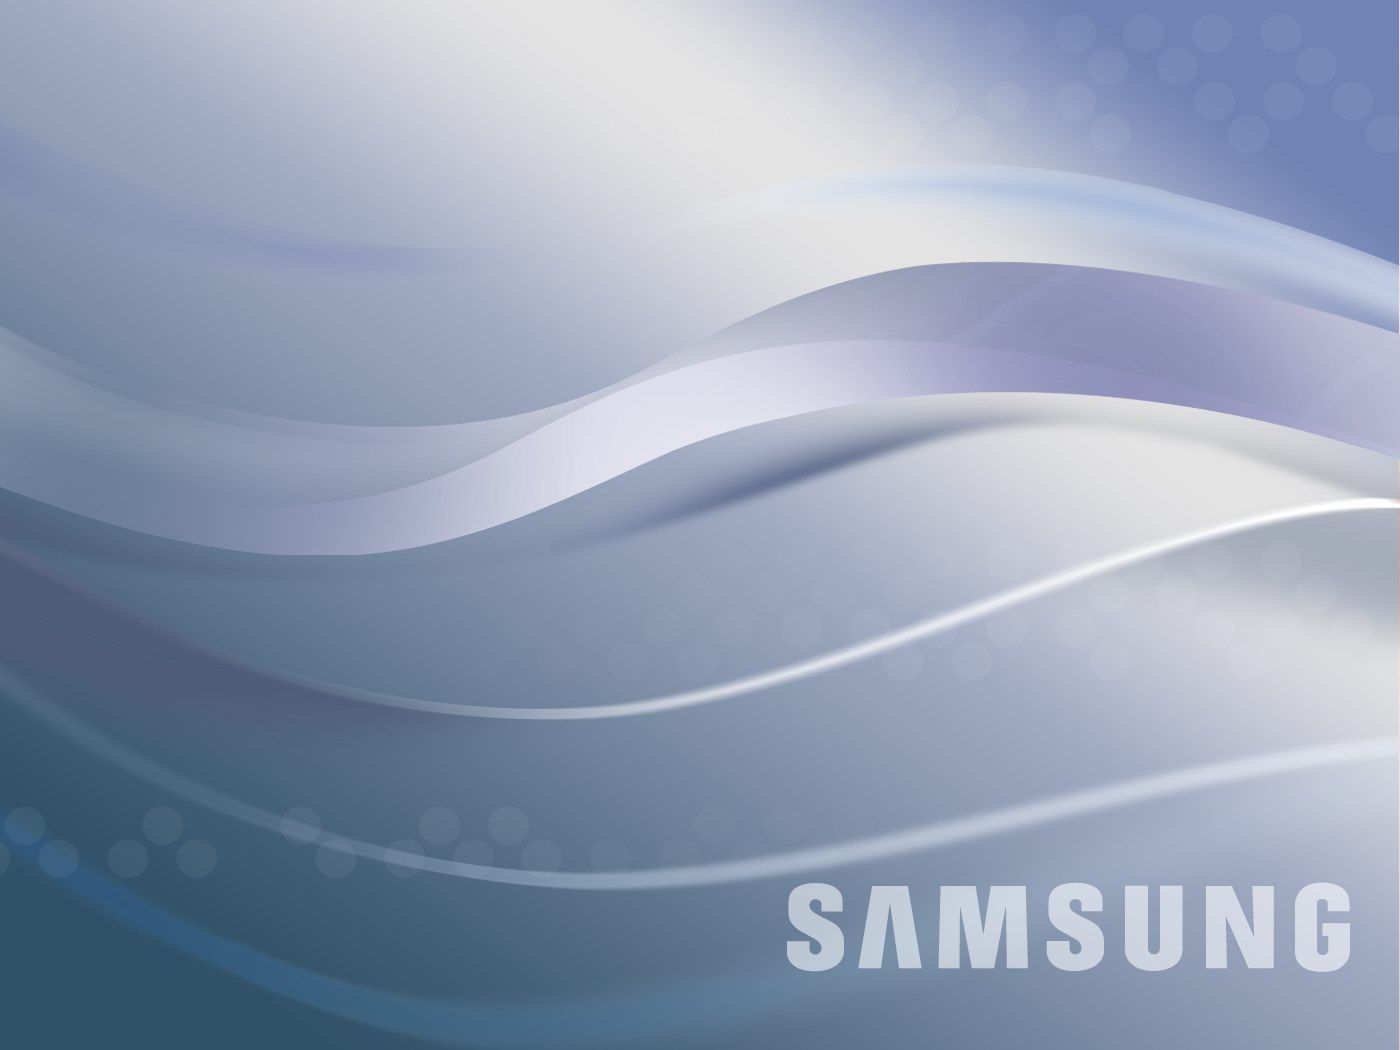 Samsung E2252 Wallpaper Free Download | Free HD Wallpapers